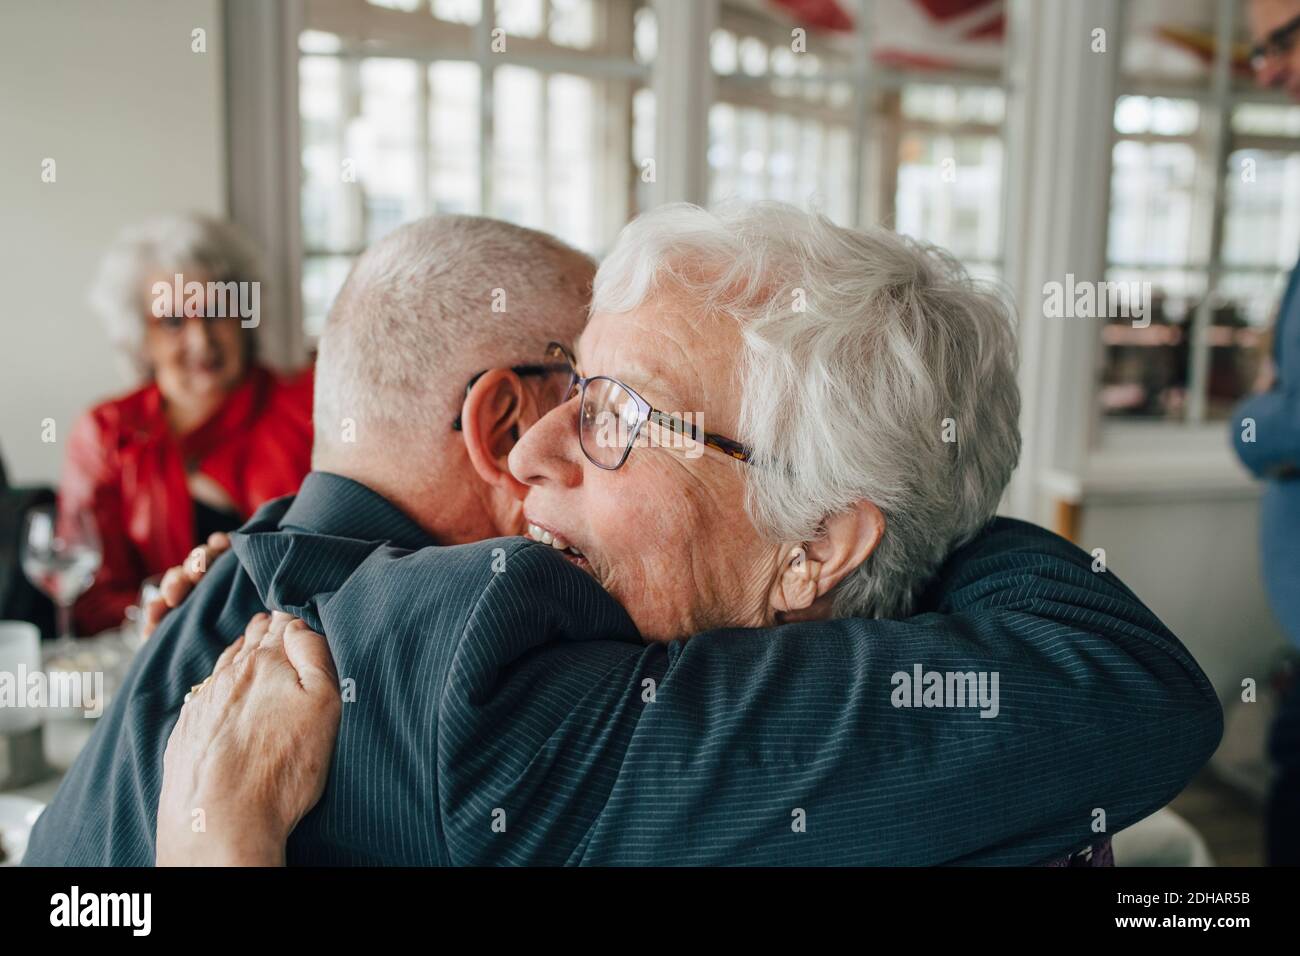 Senior man embracing woman while sitting in restaurant Stock Photo